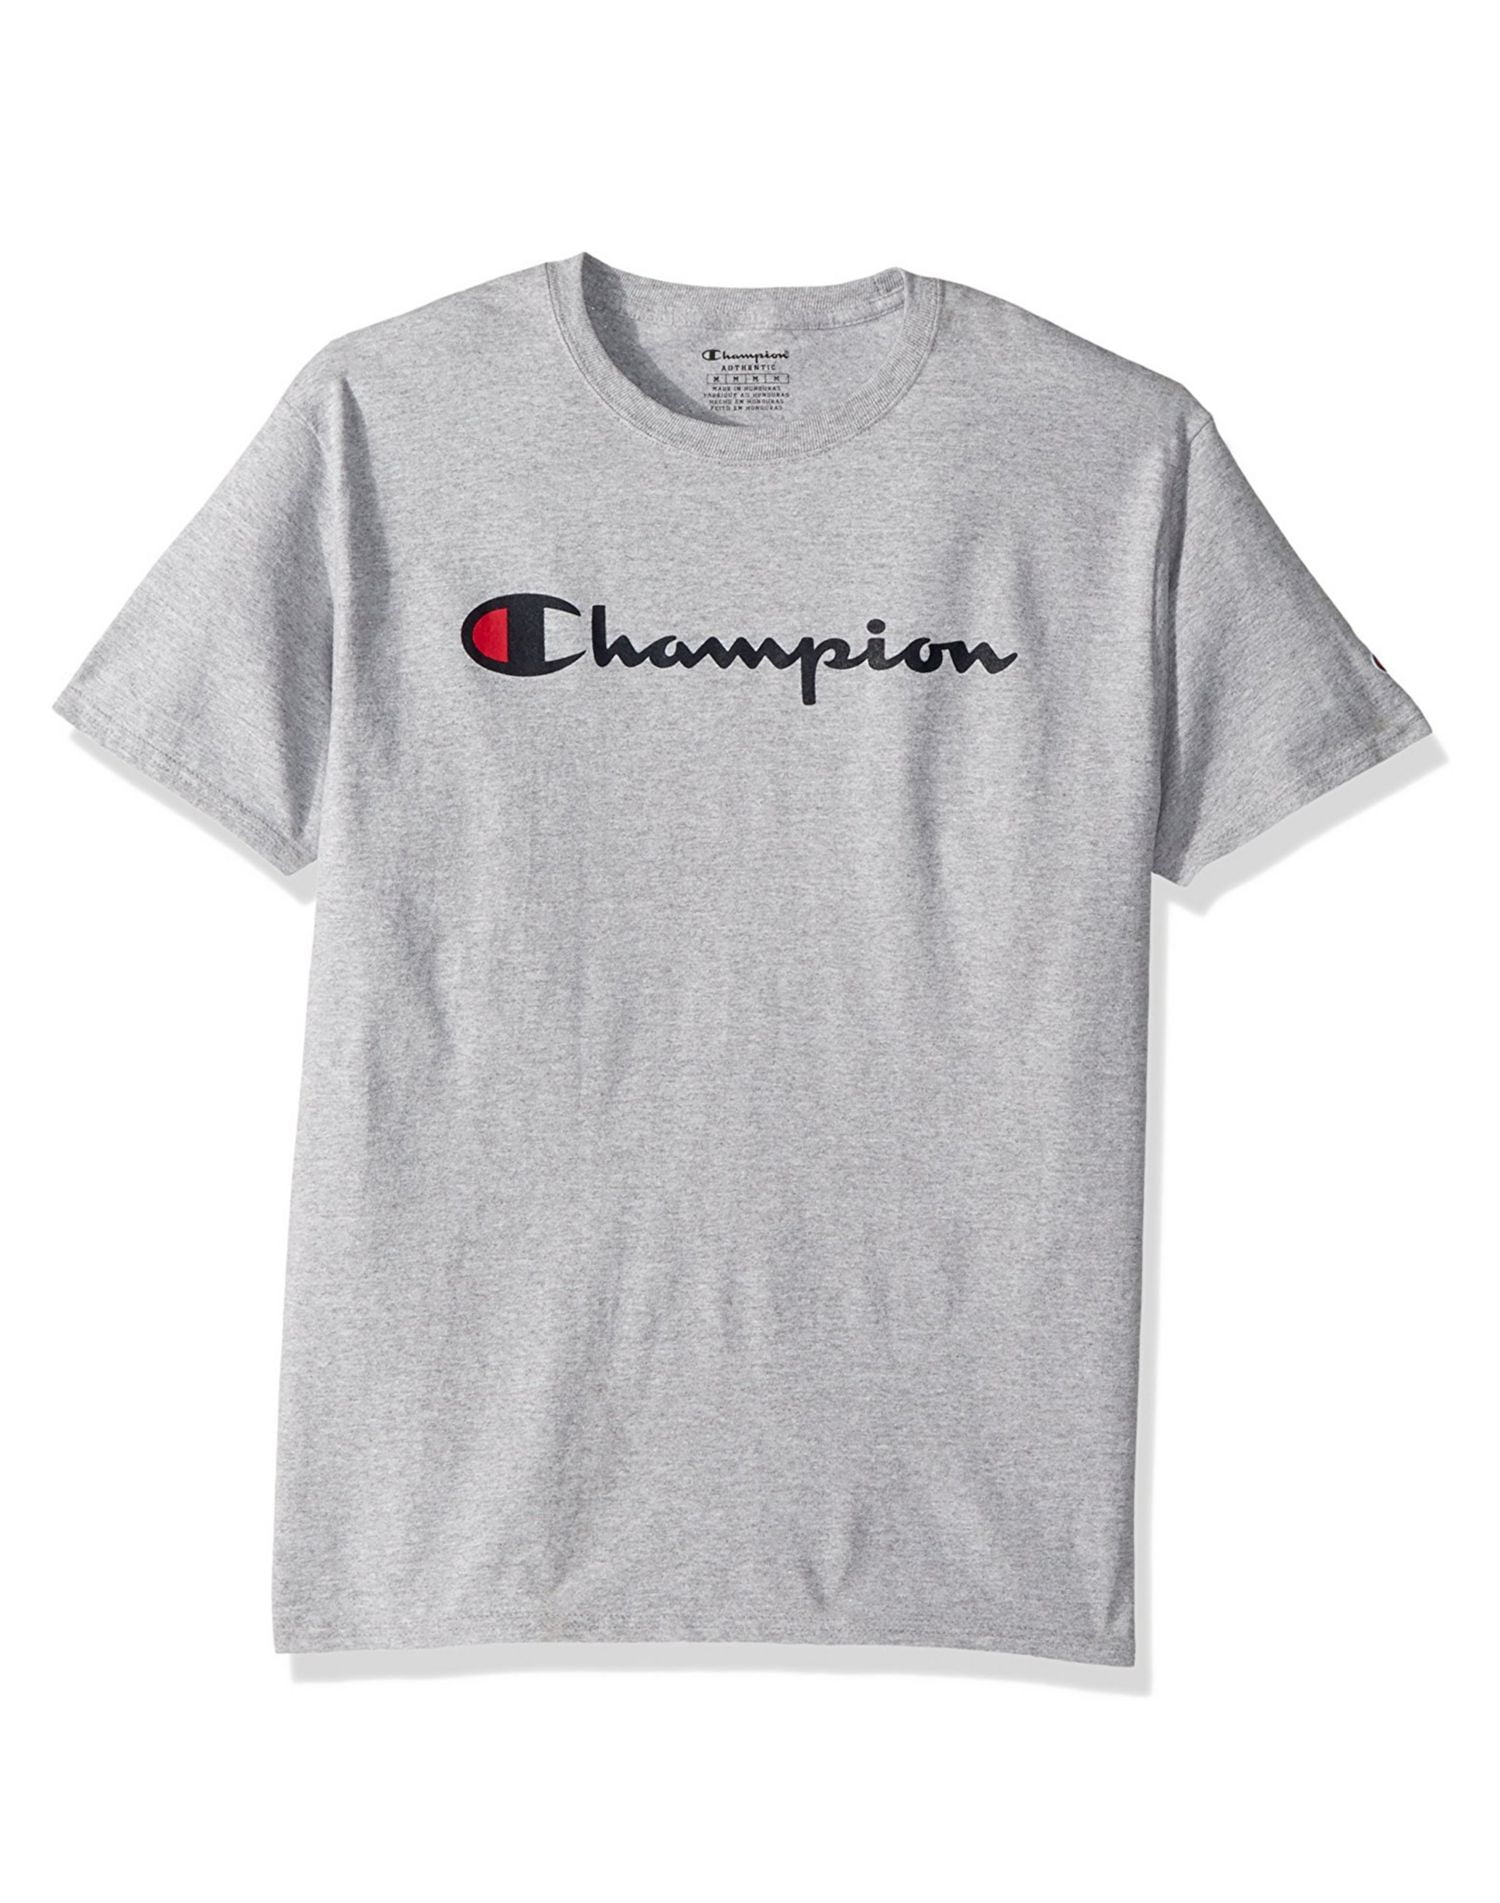 boys black champion shirt